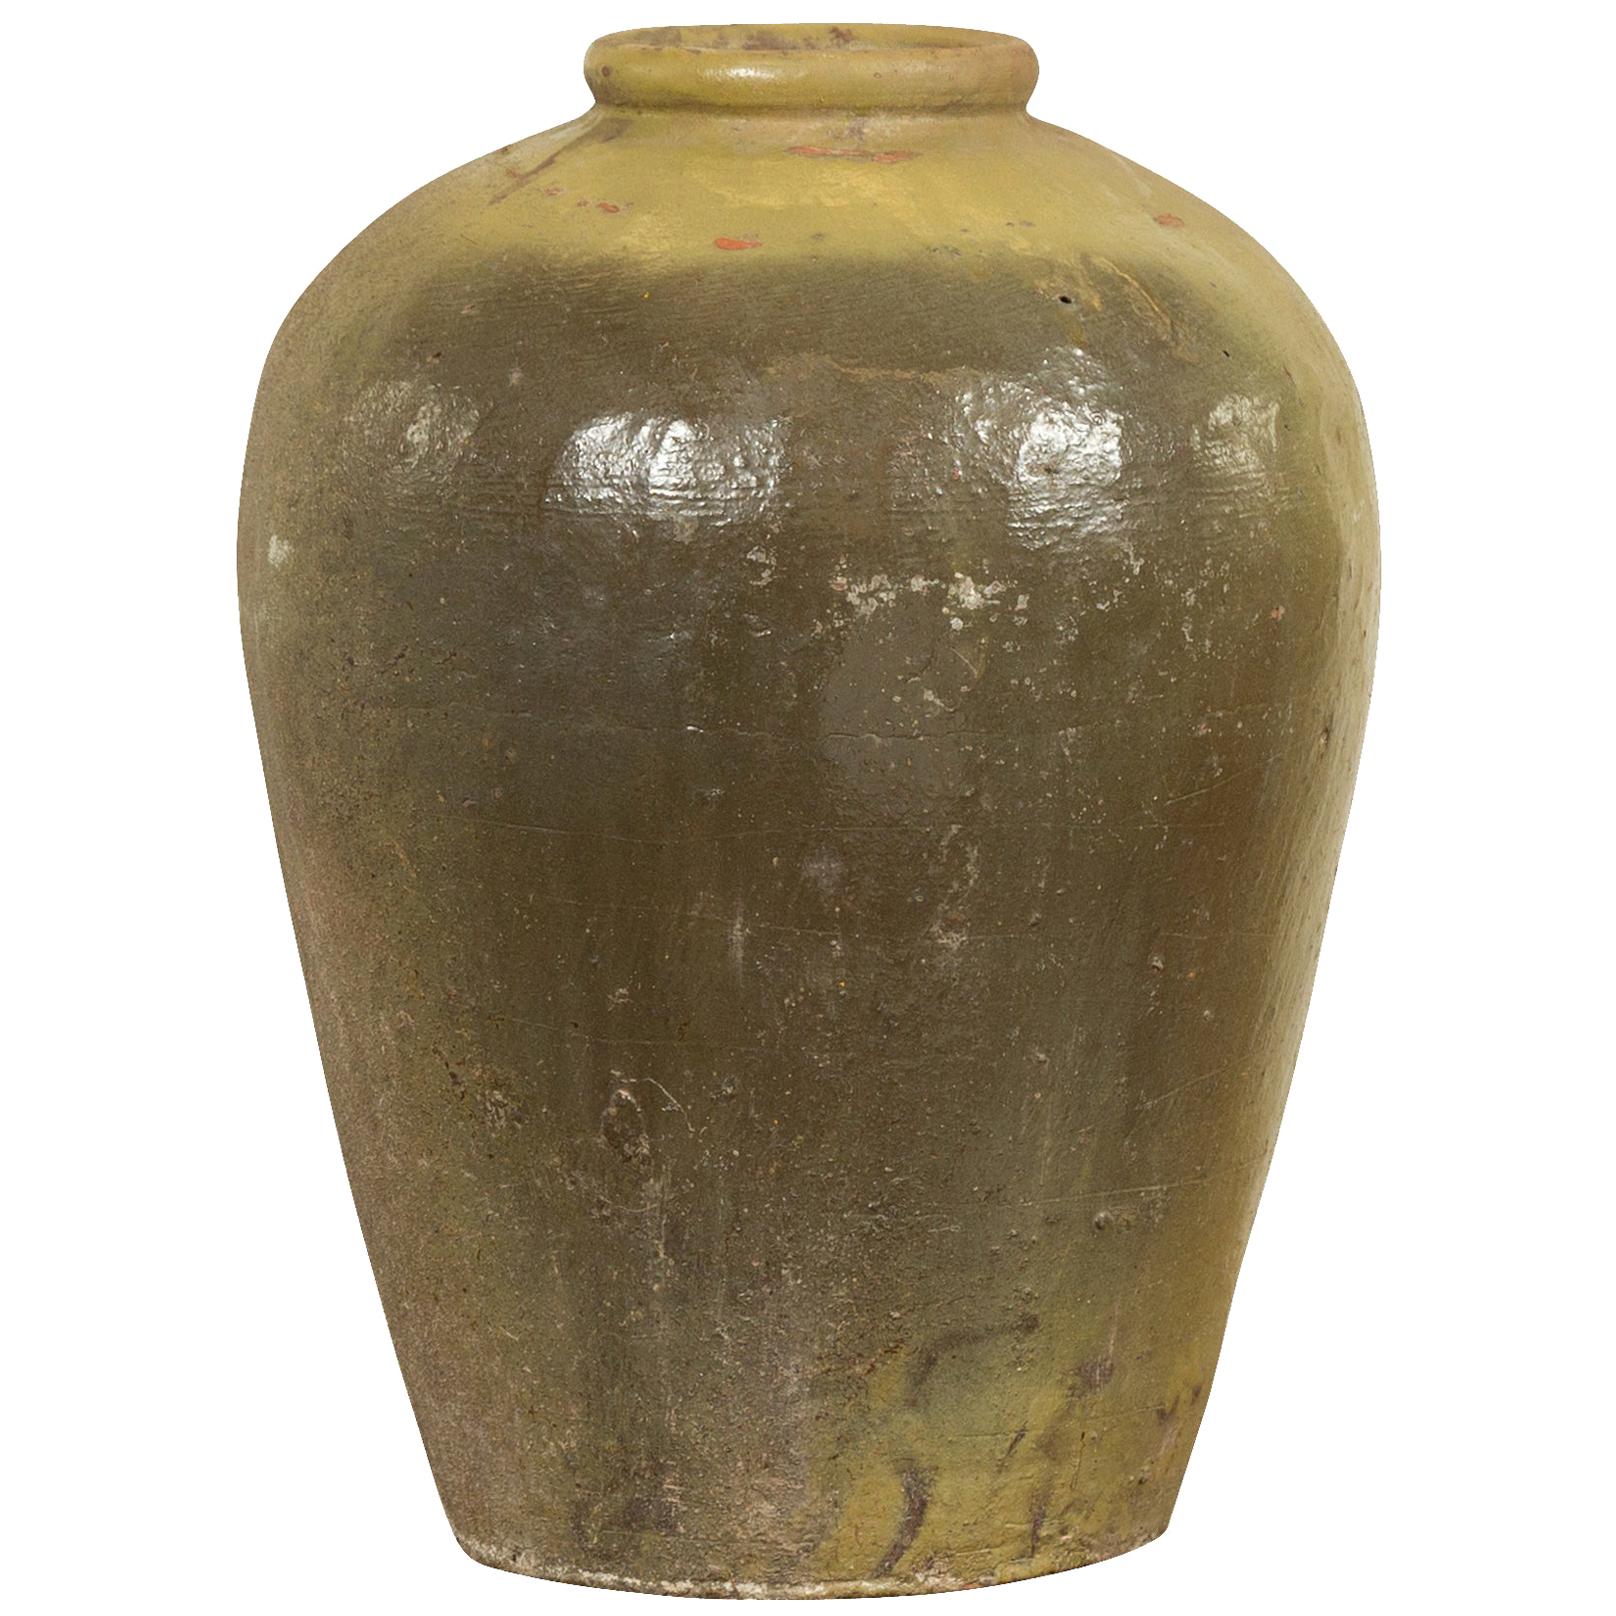 Antique Chinese Water Jar with Sand Glaze Verdigris Patina